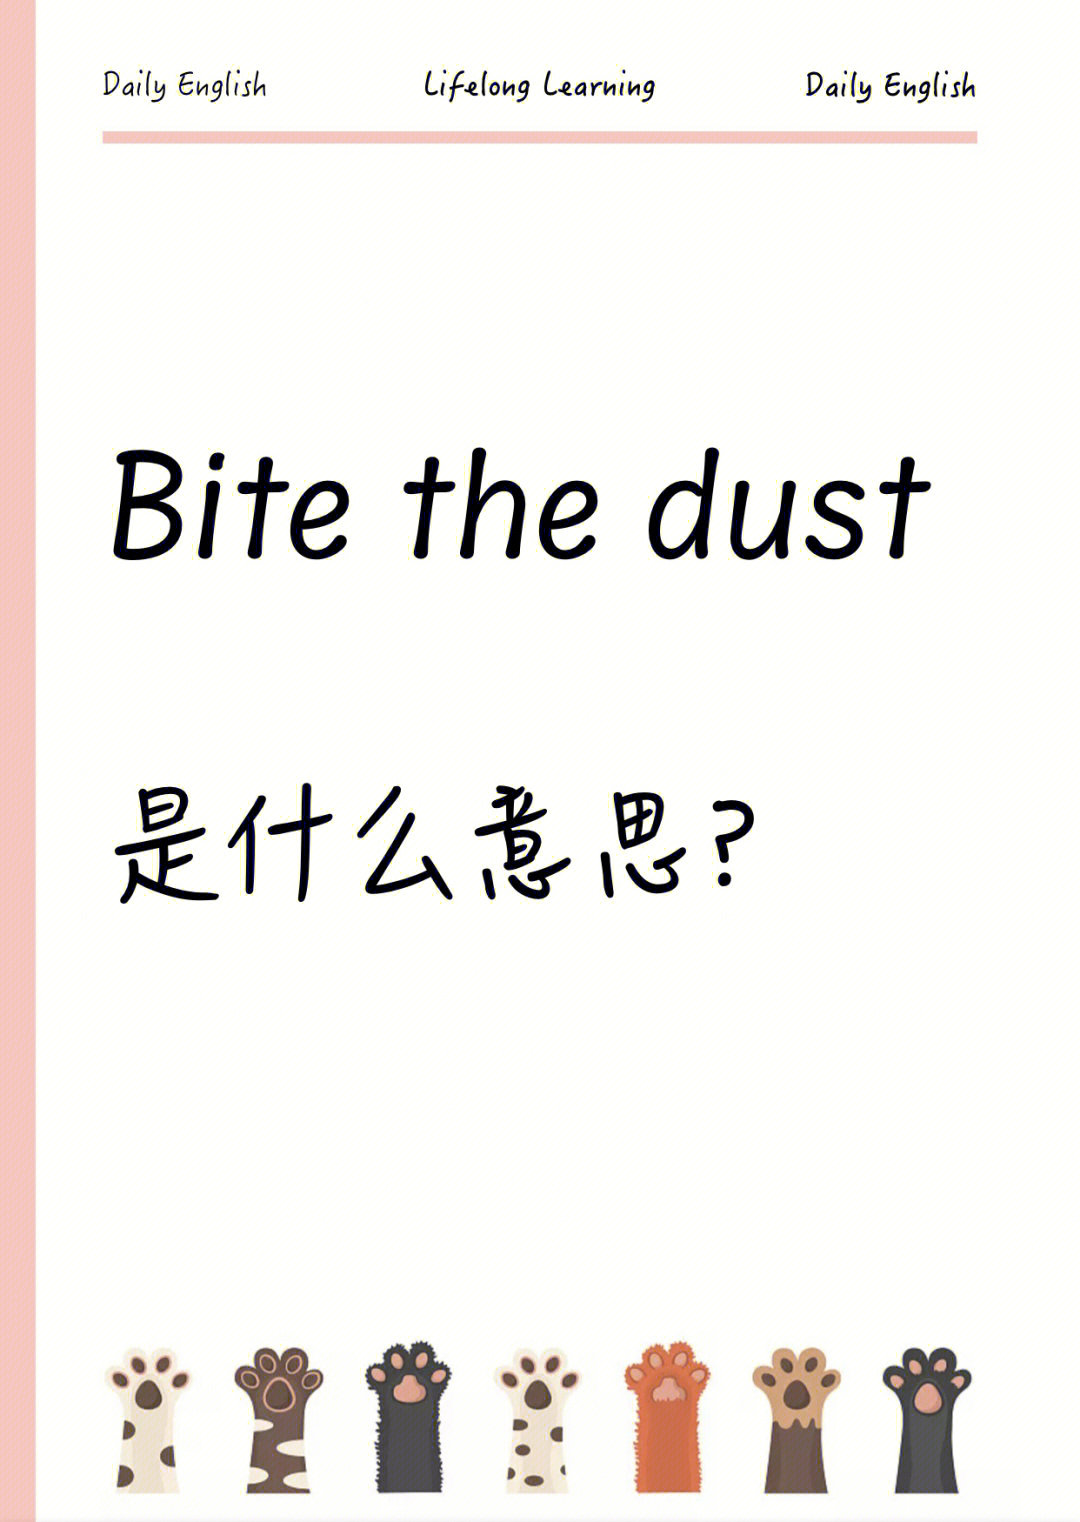 bite the dust第一反应是什么意思呢?咬土?啃土?吃土?